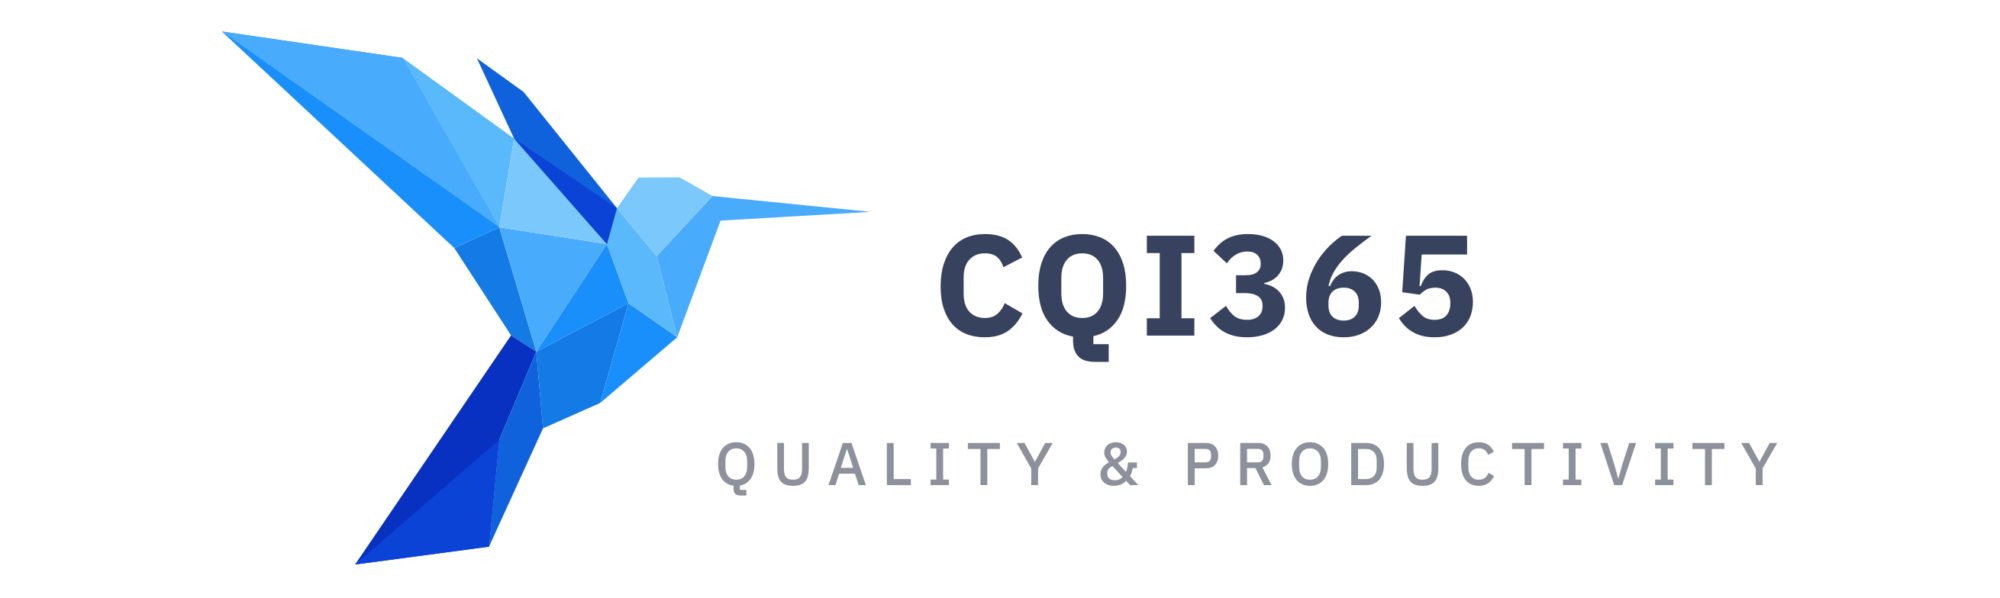 CQI 365 | Quality & Productivity